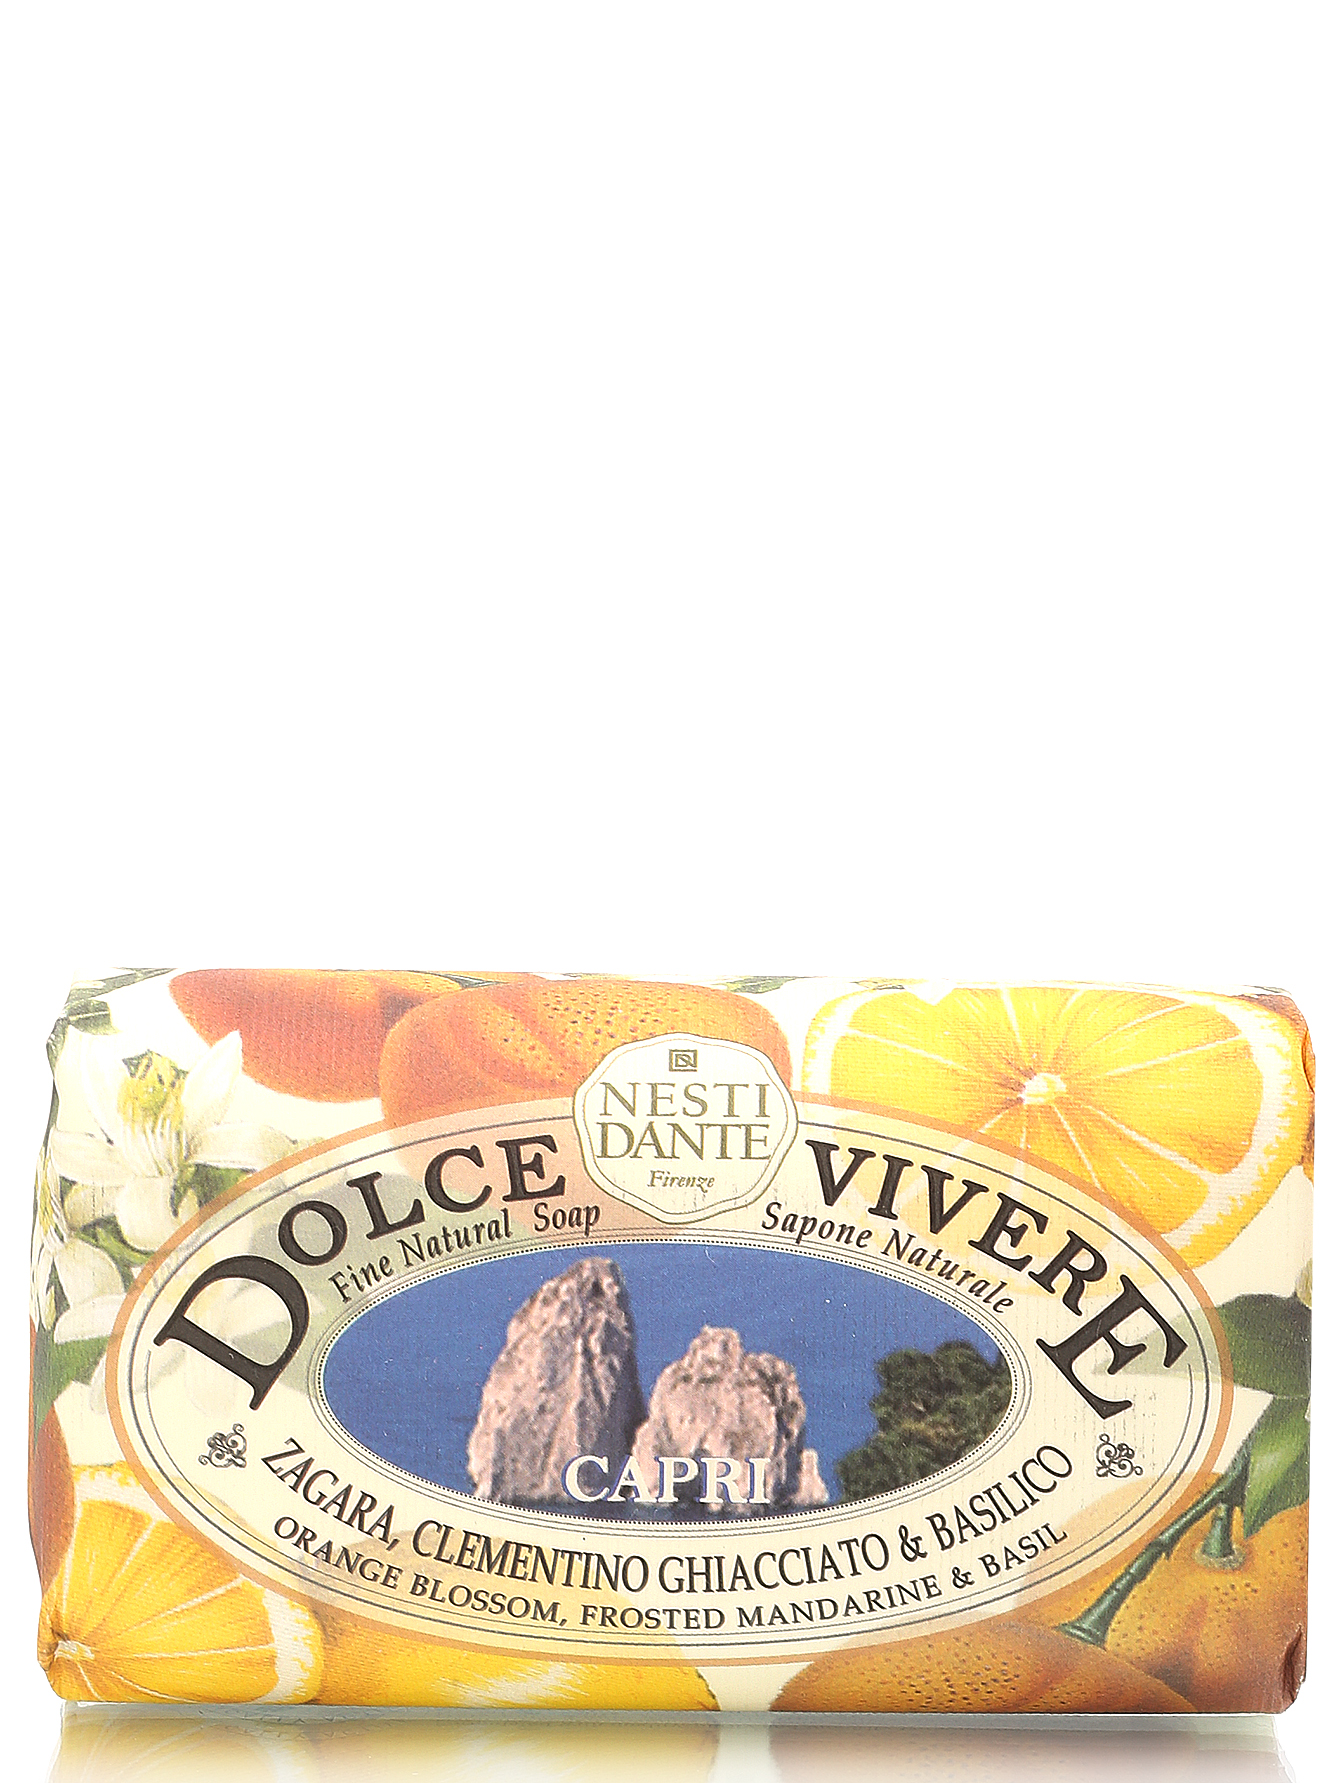 Мыло Dolce Vivere Capri, 250 г - Общий вид